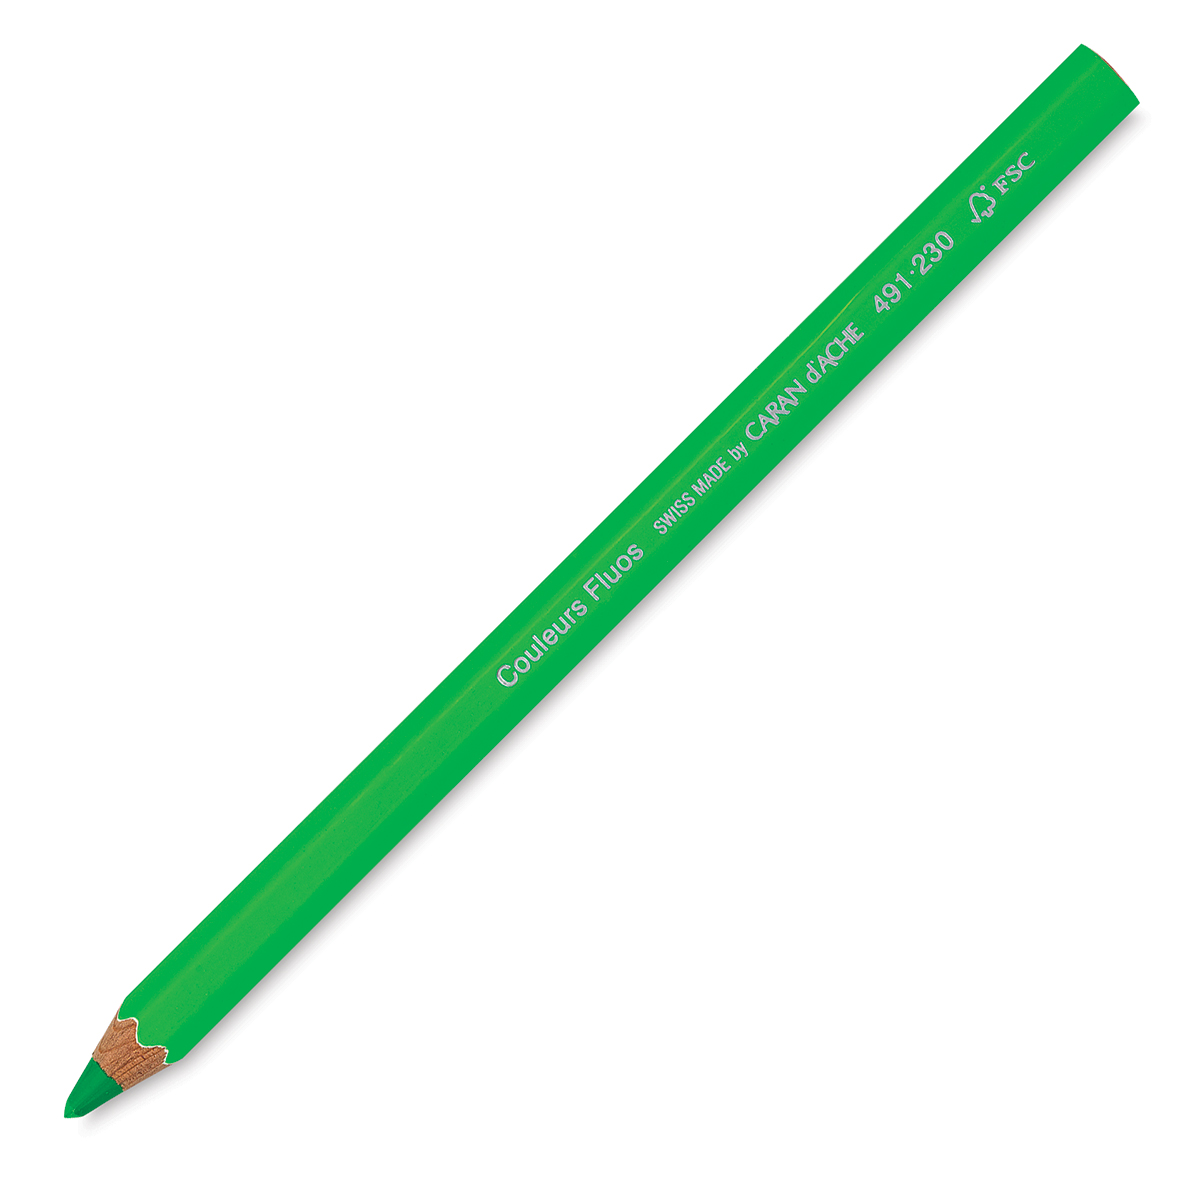 Caran dAche Colorblock Maxi Fluo Colored Pencils